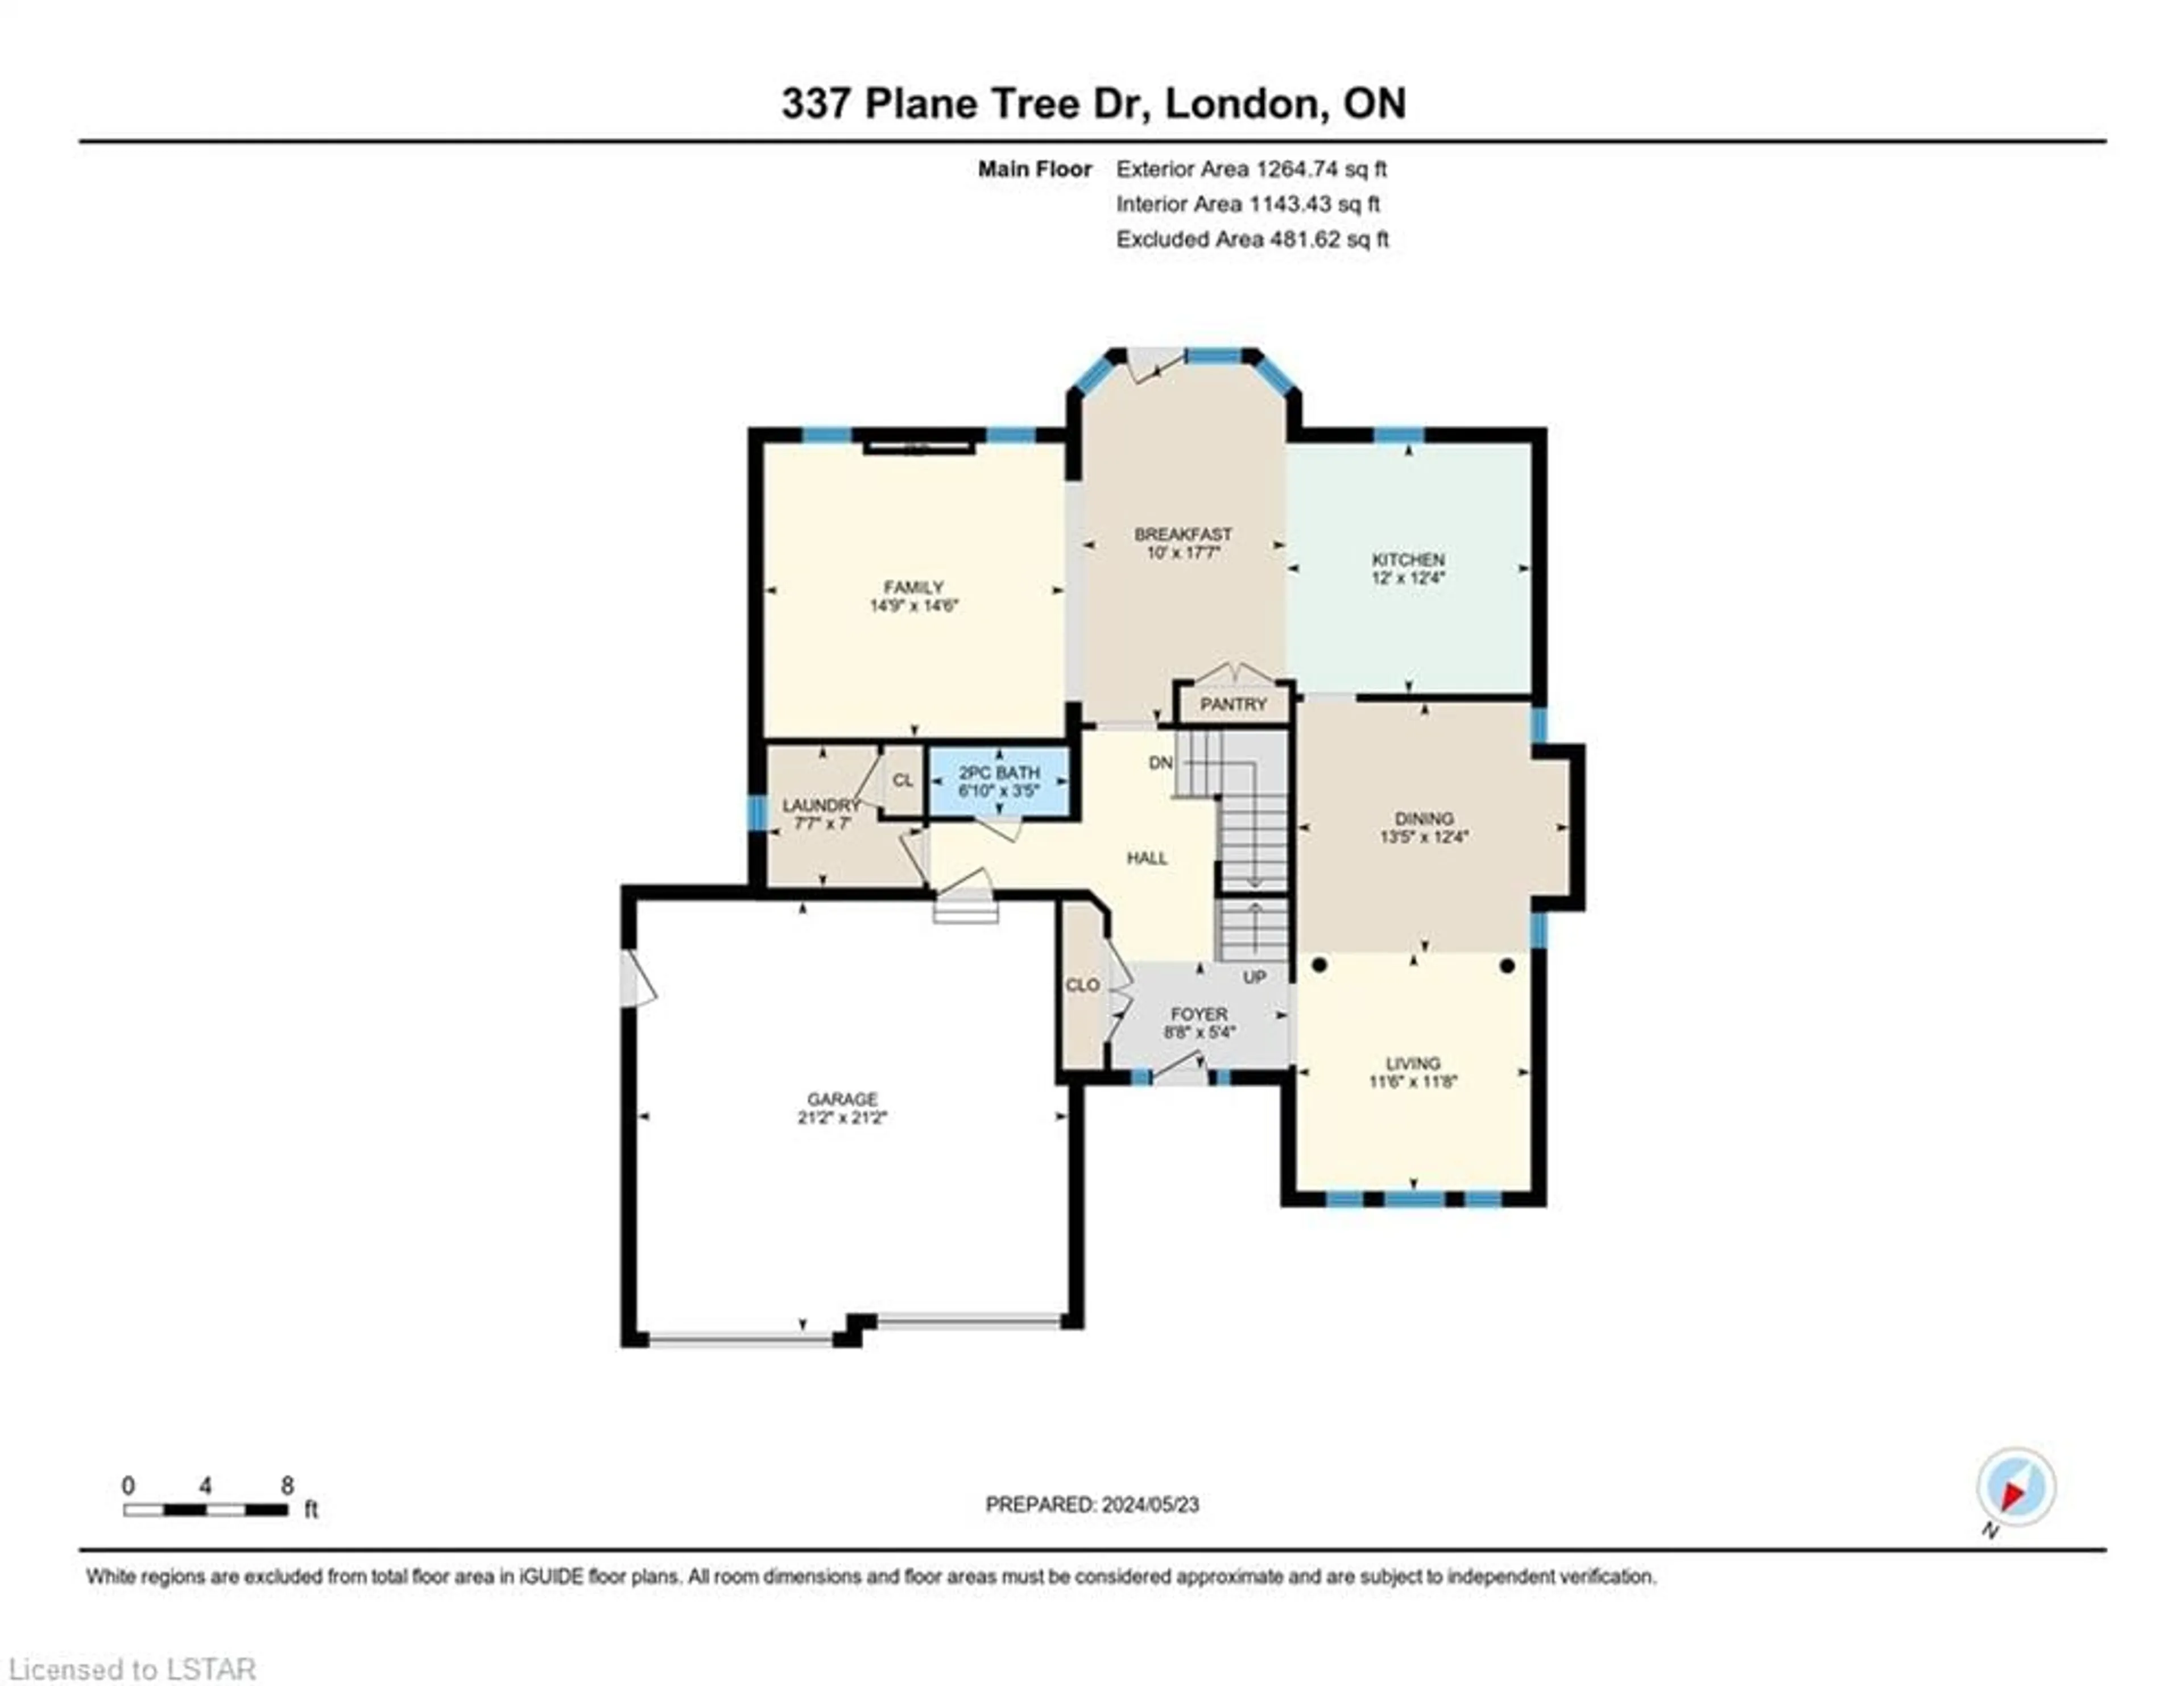 Floor plan for 337 Plane Tree Dr, London Ontario N6G 5J2